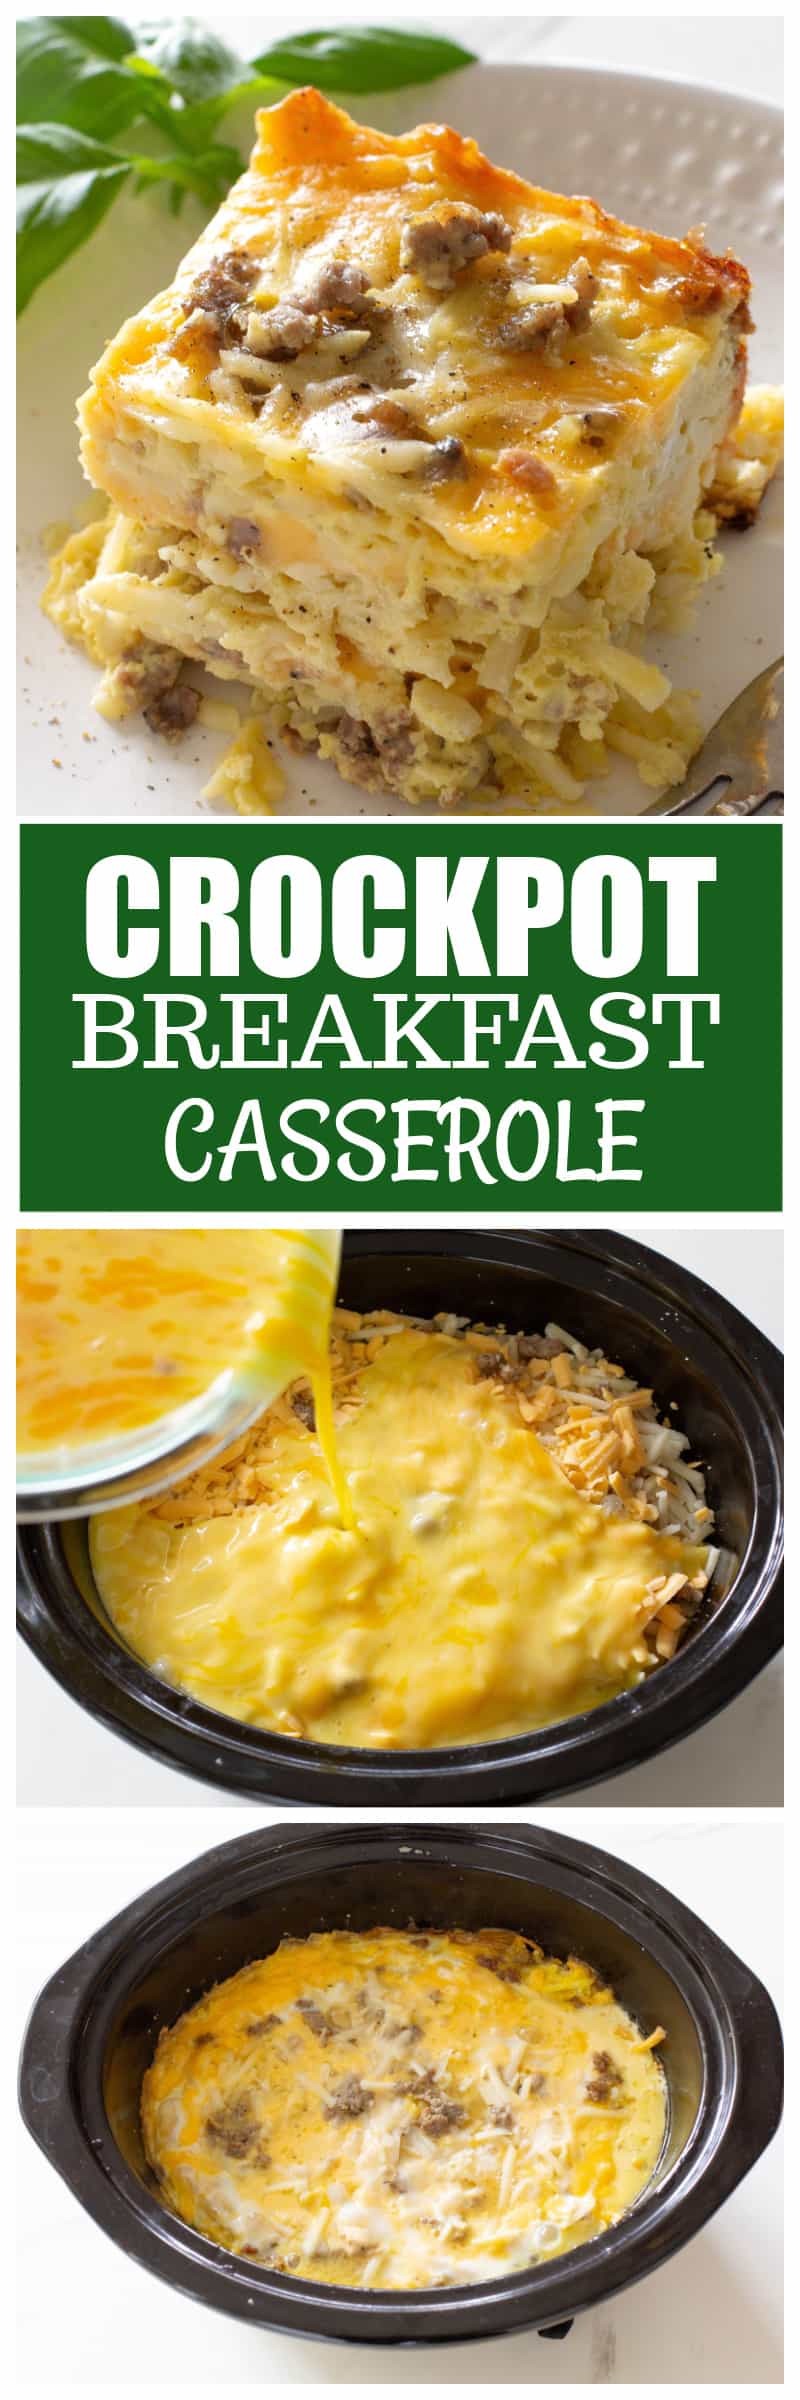 https://www.the-girl-who-ate-everything.com/wp-content/uploads/2022/08/crokpot-breakfast-casserole.jpg